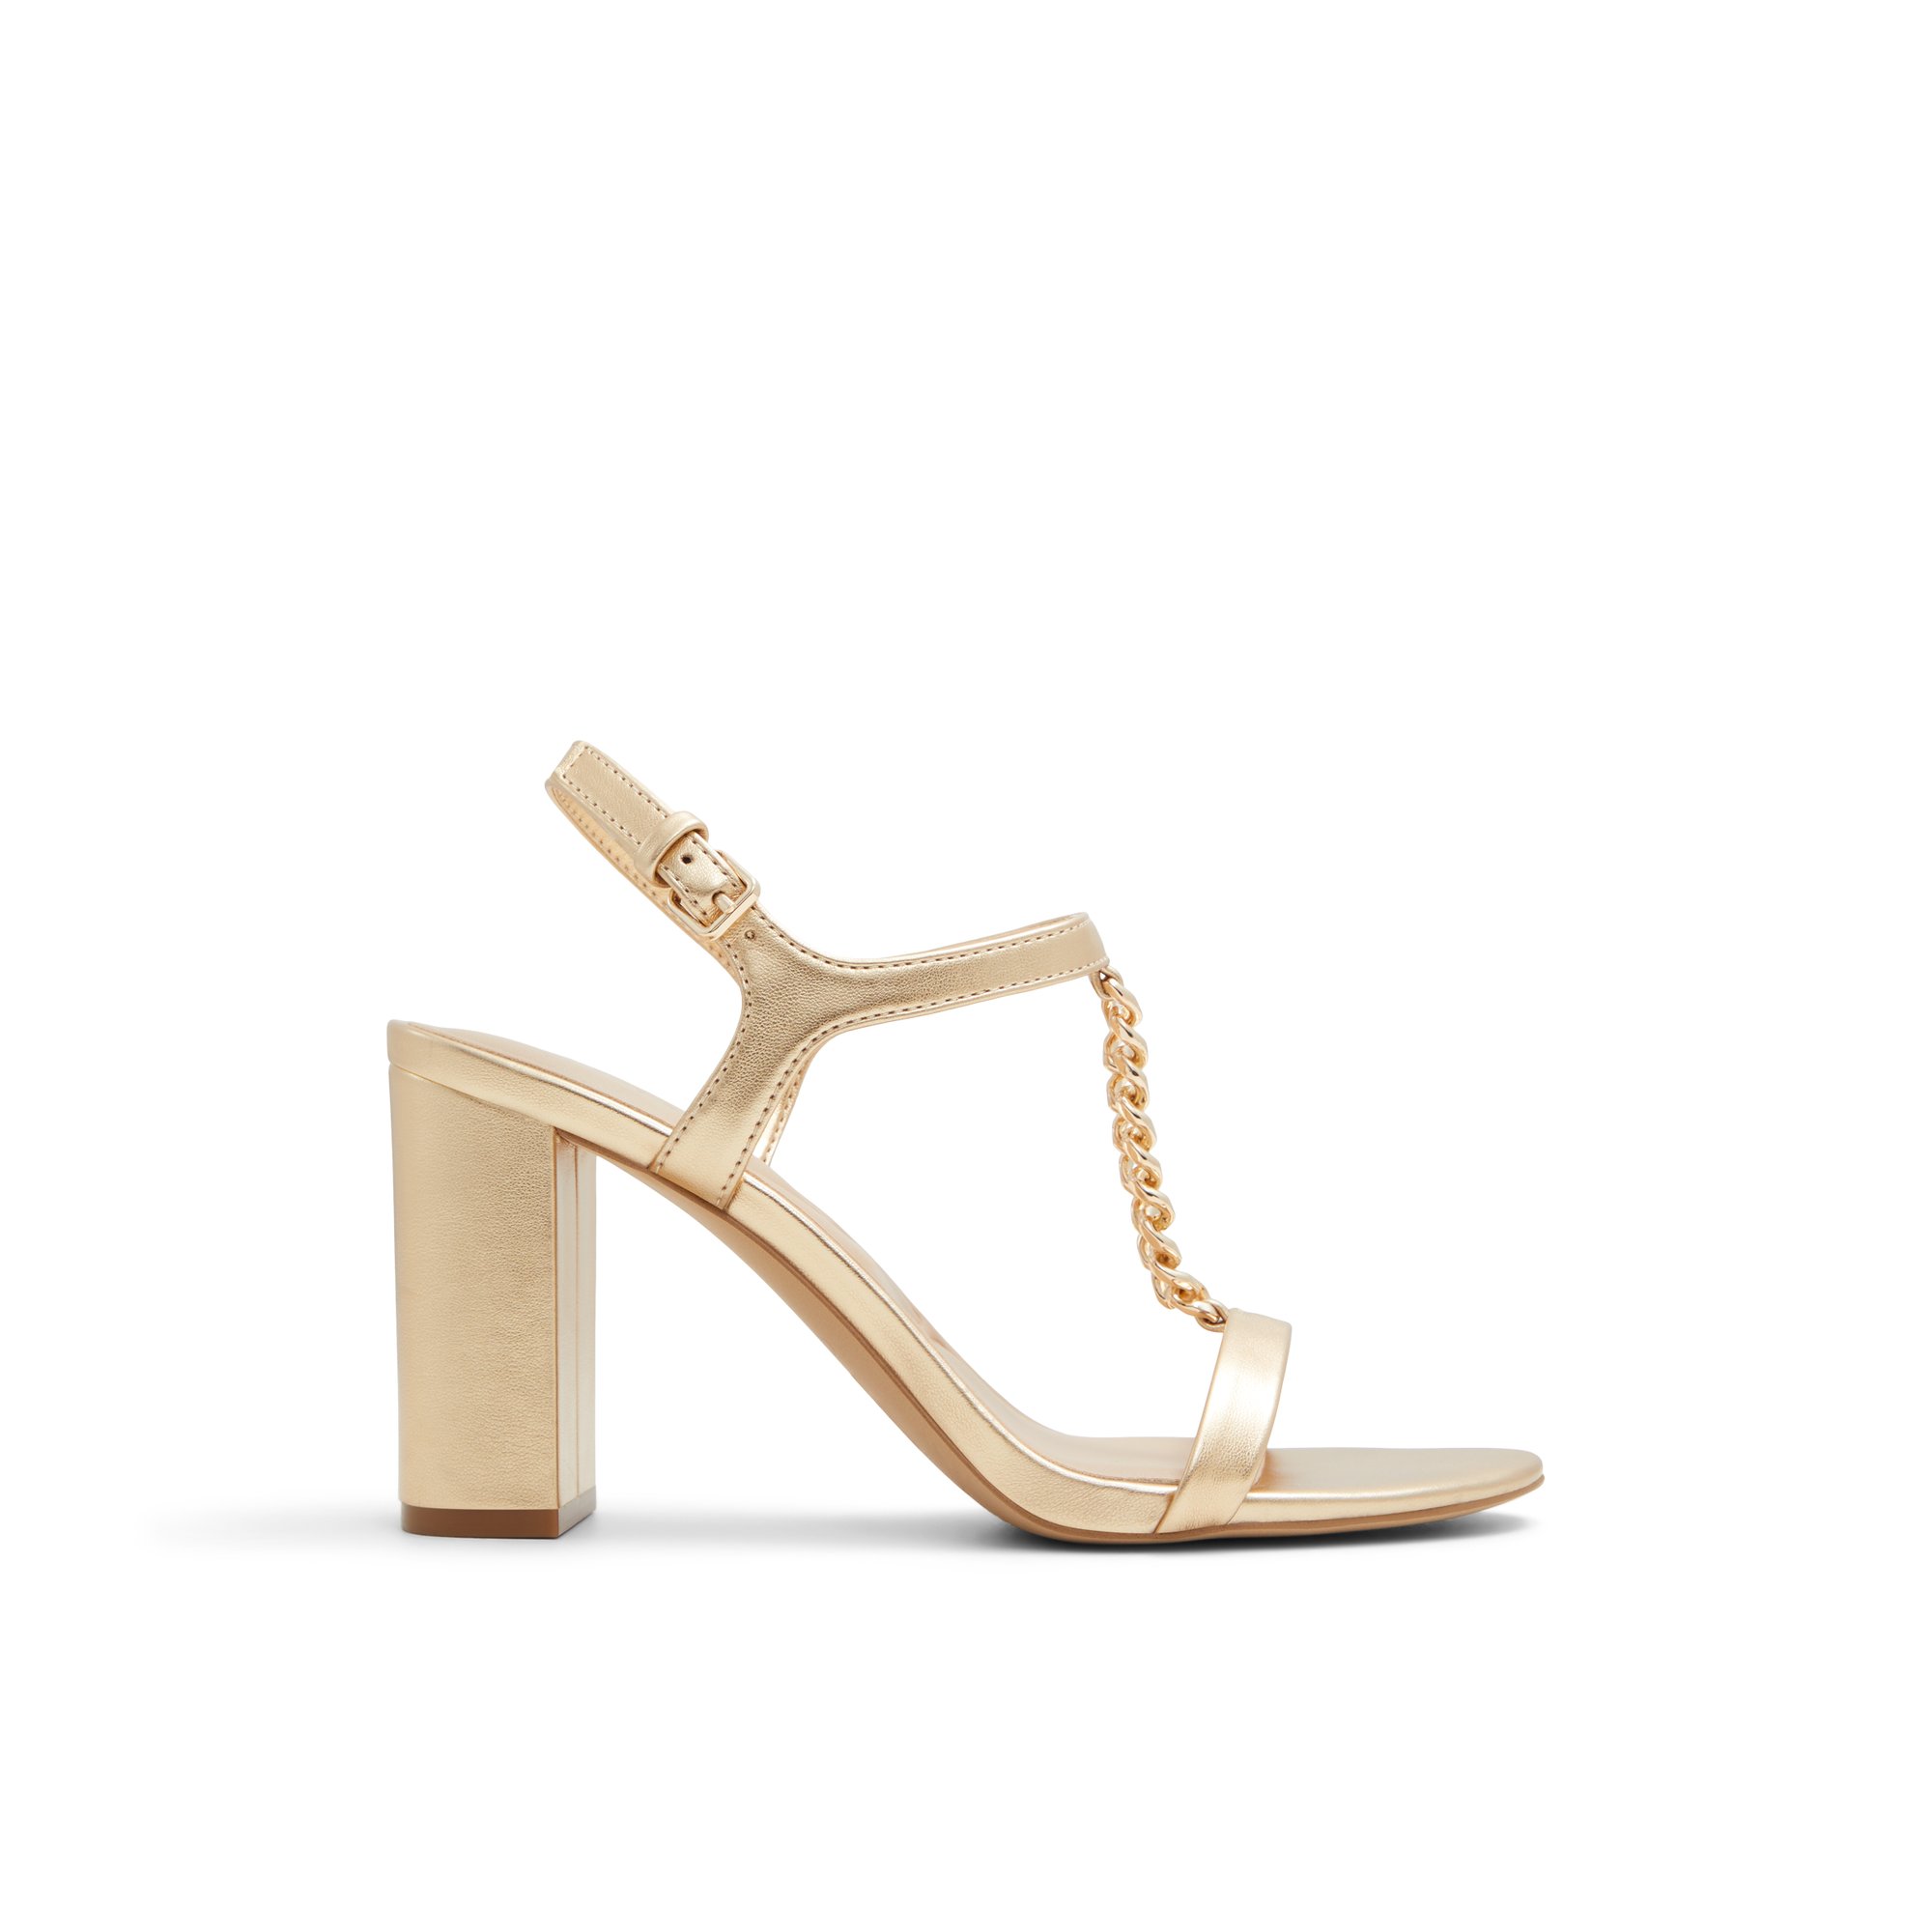 ALDO Clelia - Women's Sandals Strappy - Gold